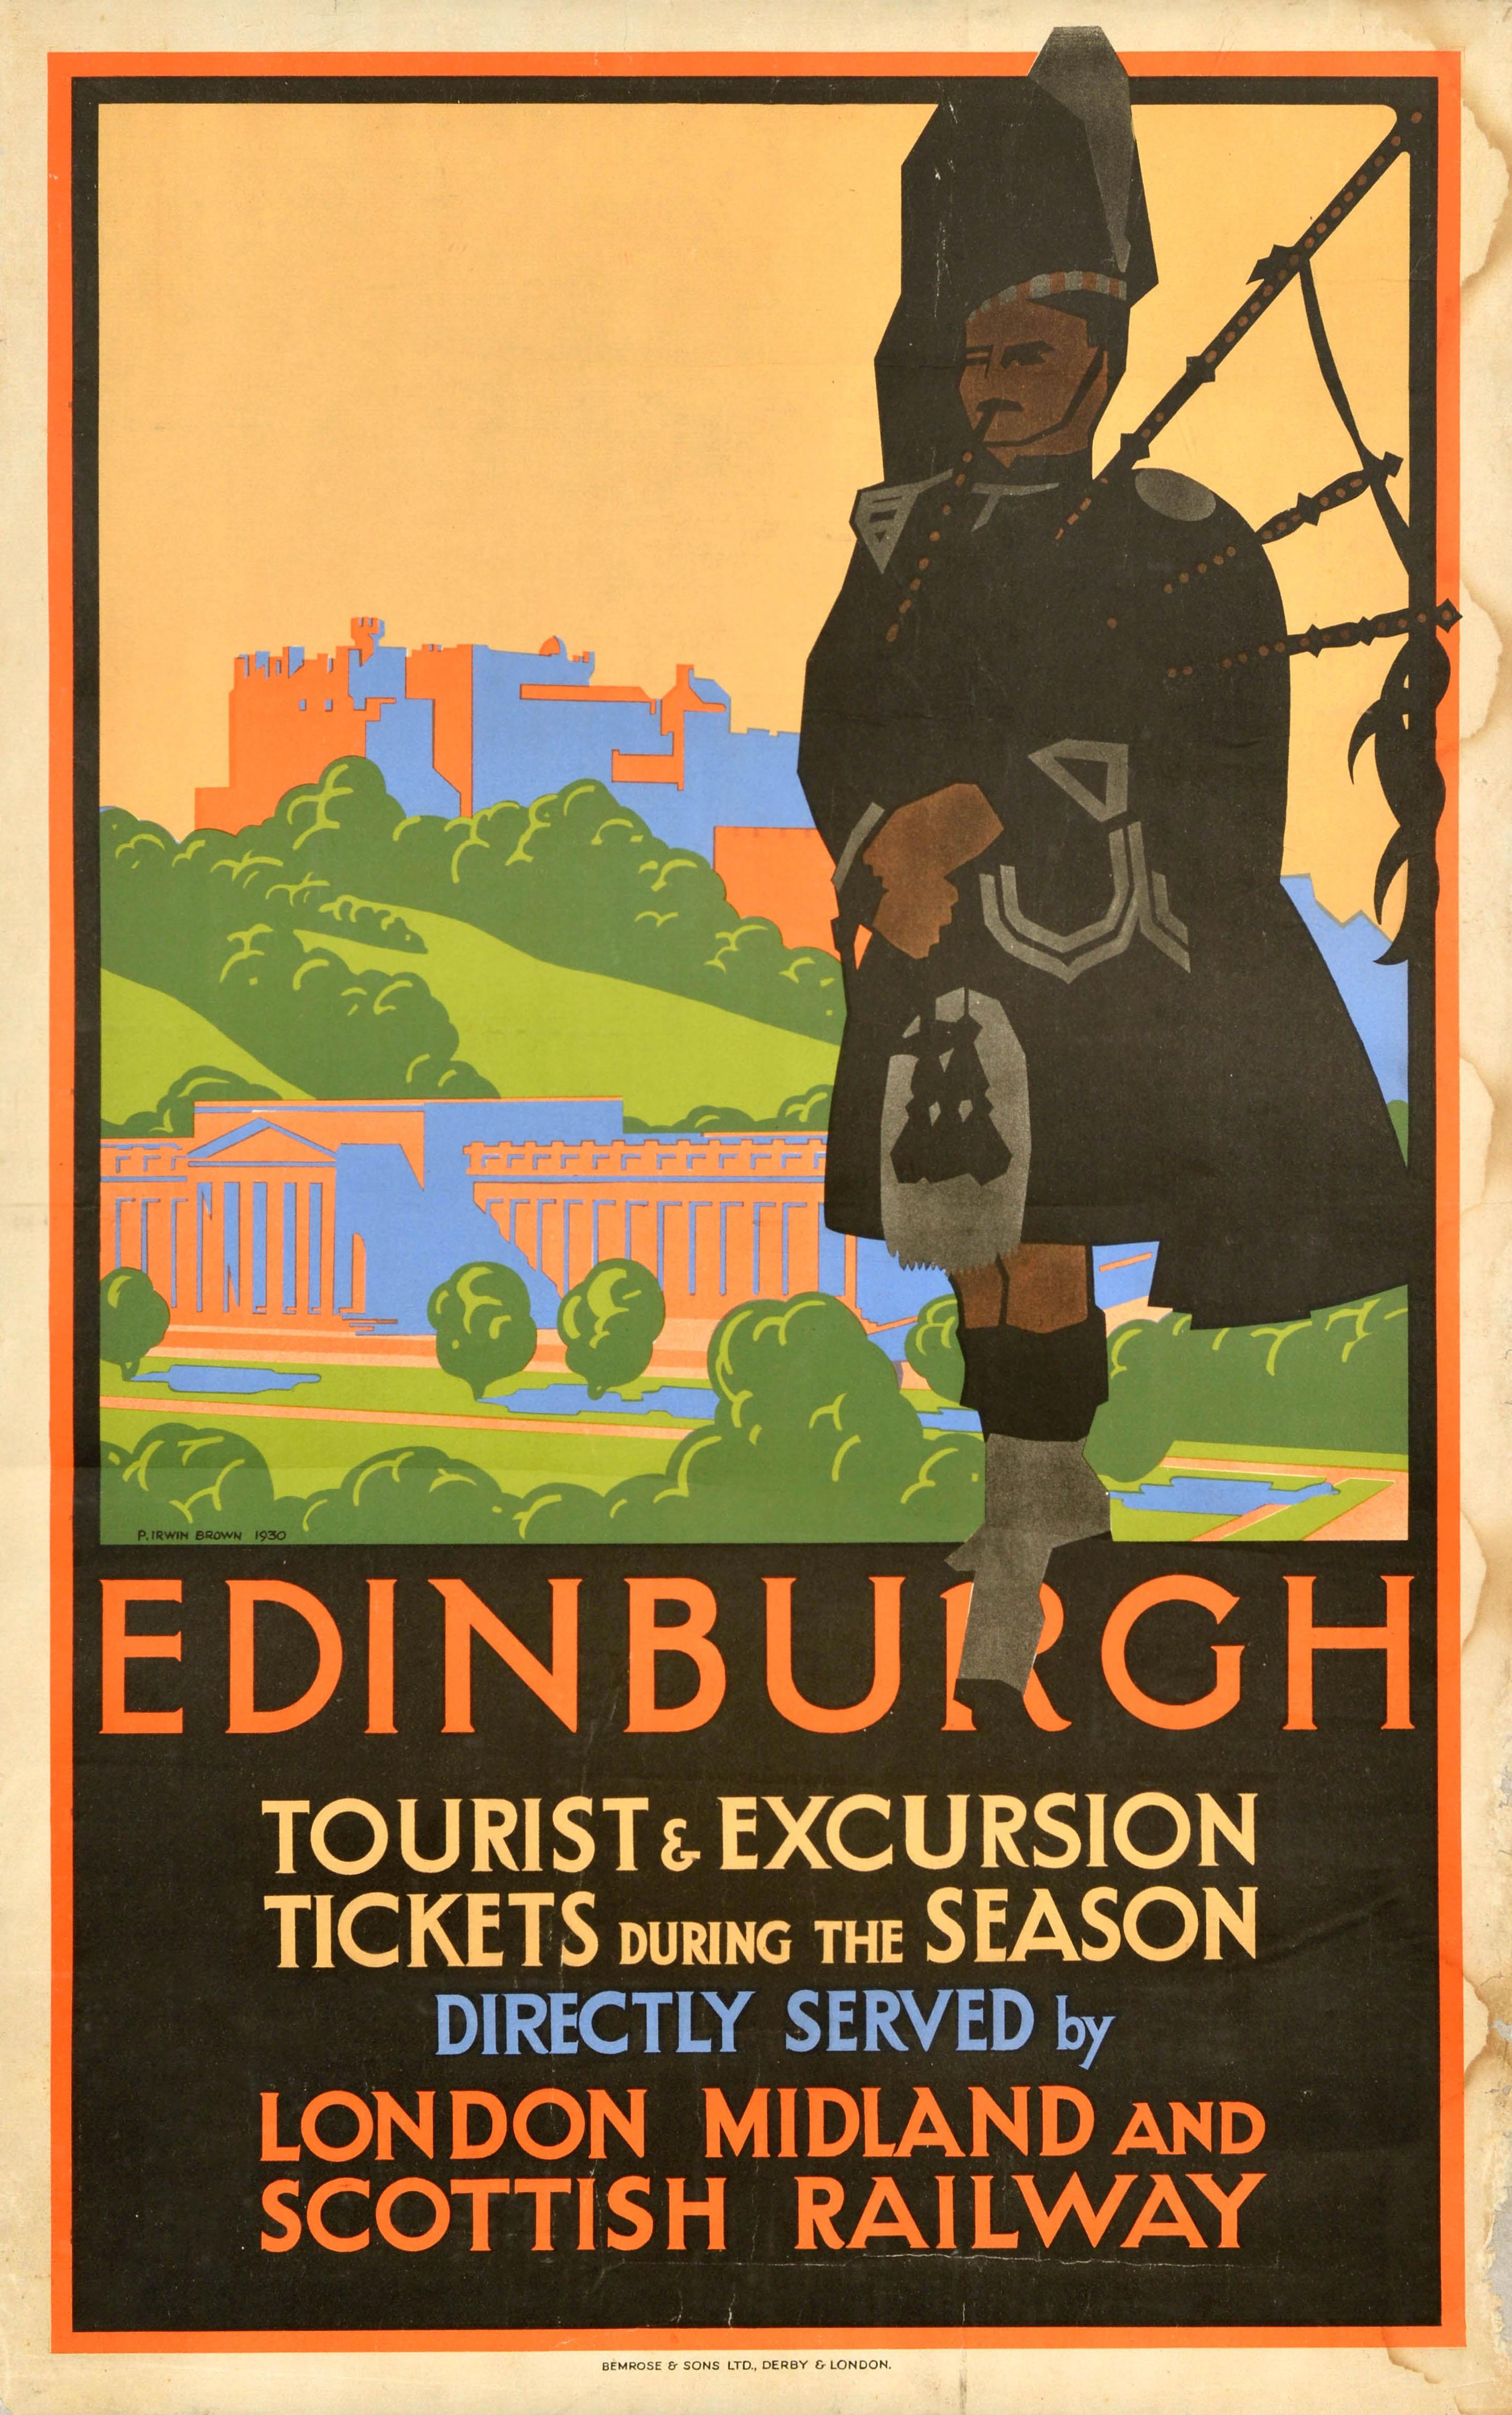 Pieter Irwin Brown Print - Original Vintage Travel Poster Edinburgh LMS London Midland And Scottish Railway